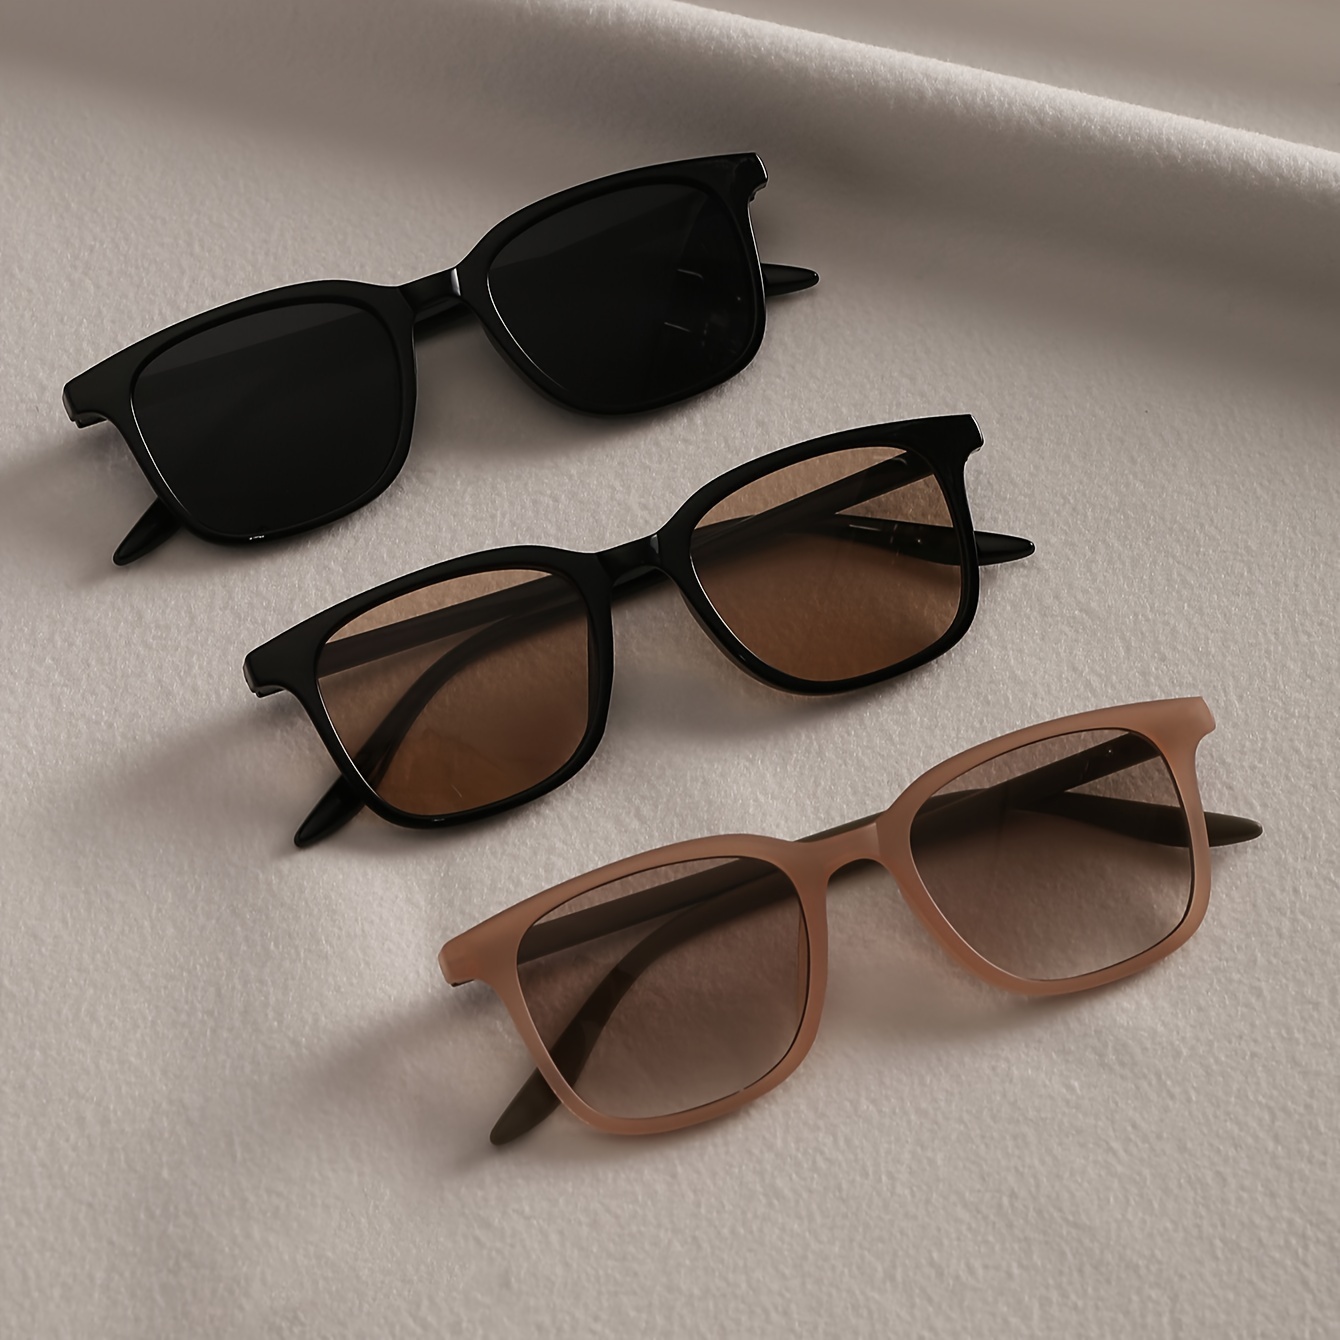 

3pcs Classic Frame Fashion Glasses For Women Men Anti Glare Sun Shades Glasses For Driving Beach Travel